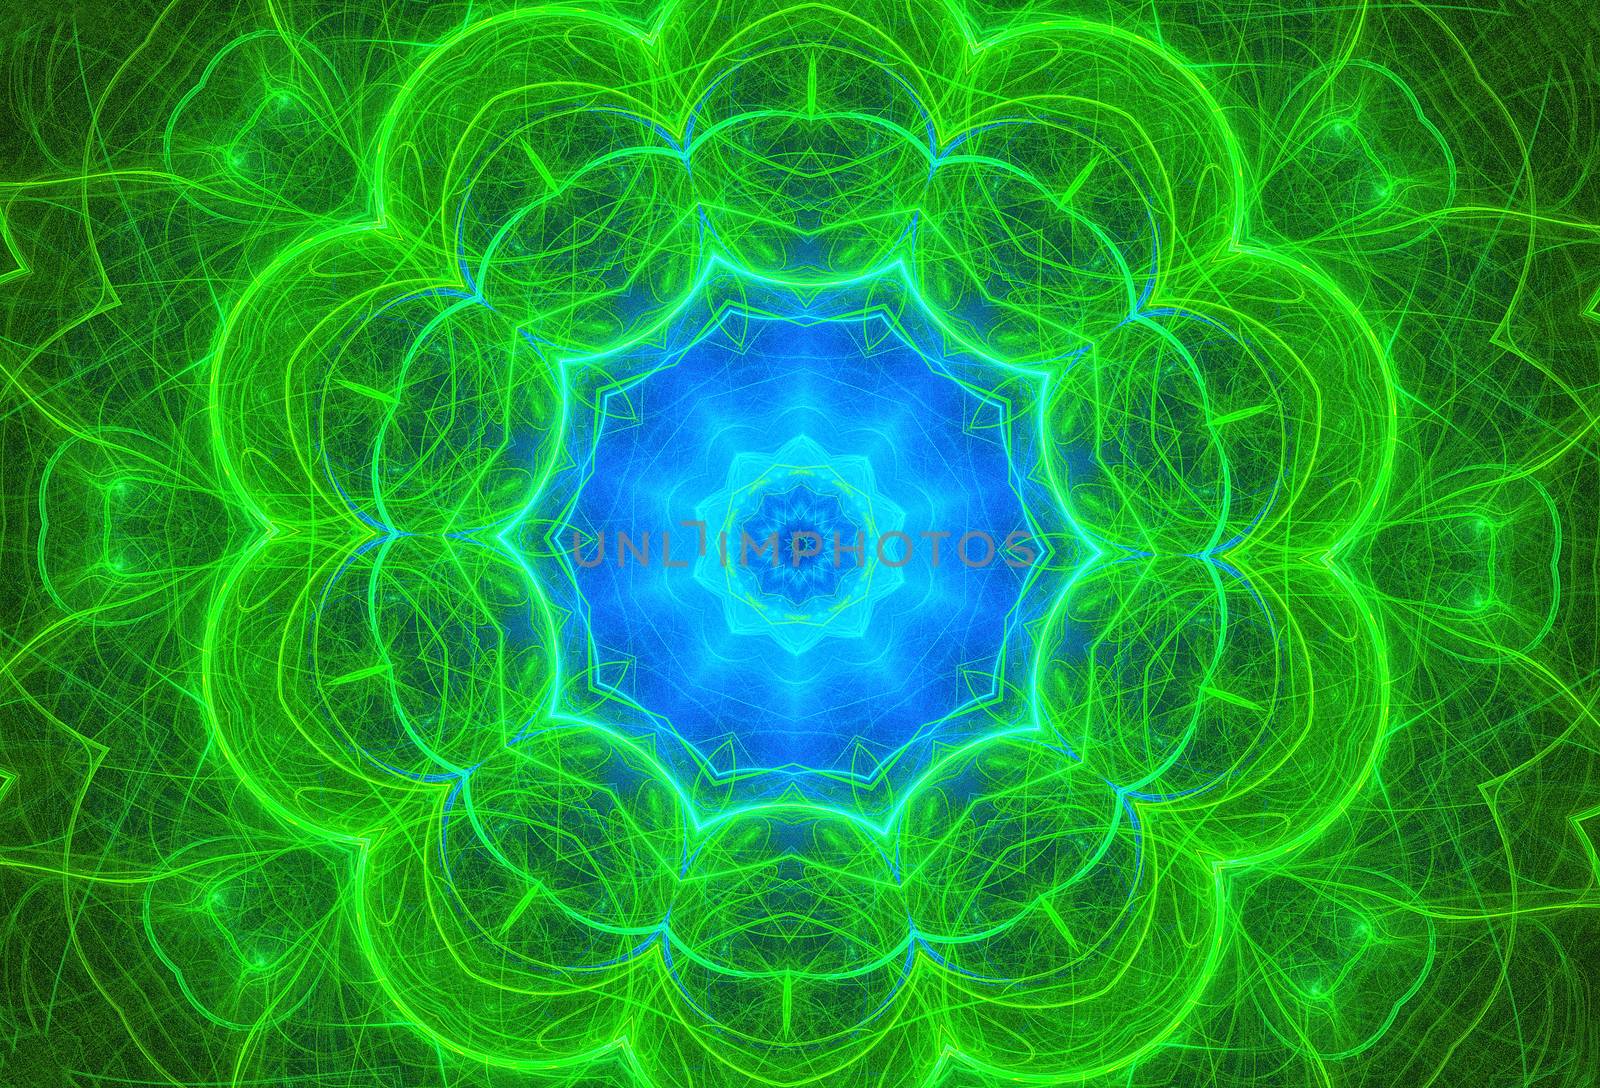 Digital Art: Fractal Graphics: The Blue Lotus. Fantastic Wallpaper / Background / Scene Design. Sci-Fi / Abstract Style.